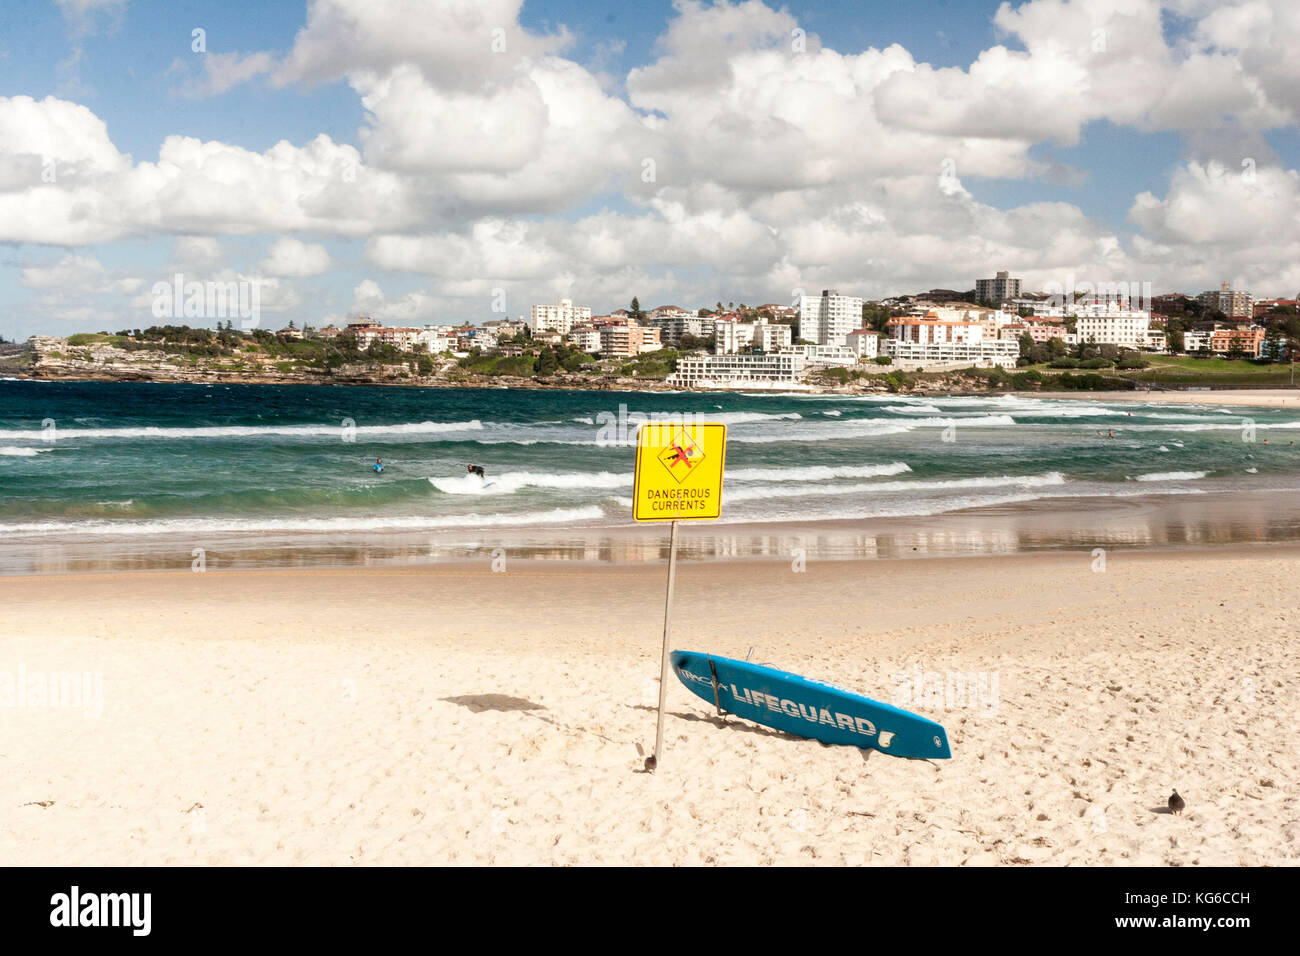 surfboard and sign on Bondai beach, Australia Stock Photo